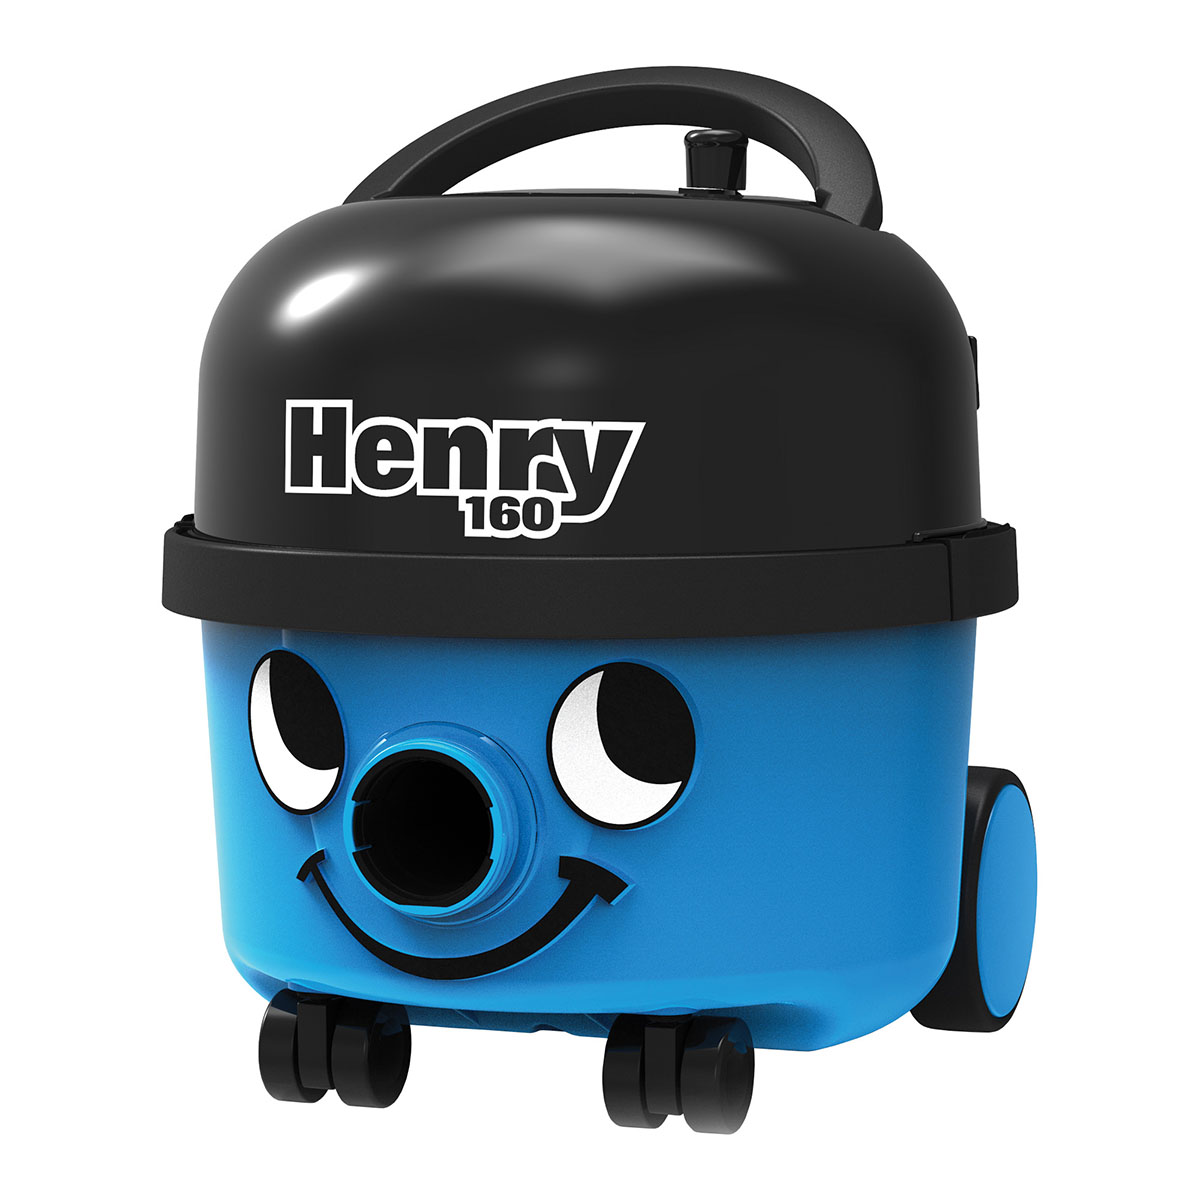 Numatic Henry HVR160 Compact Cylinder Vacuum Cleaner - Blue